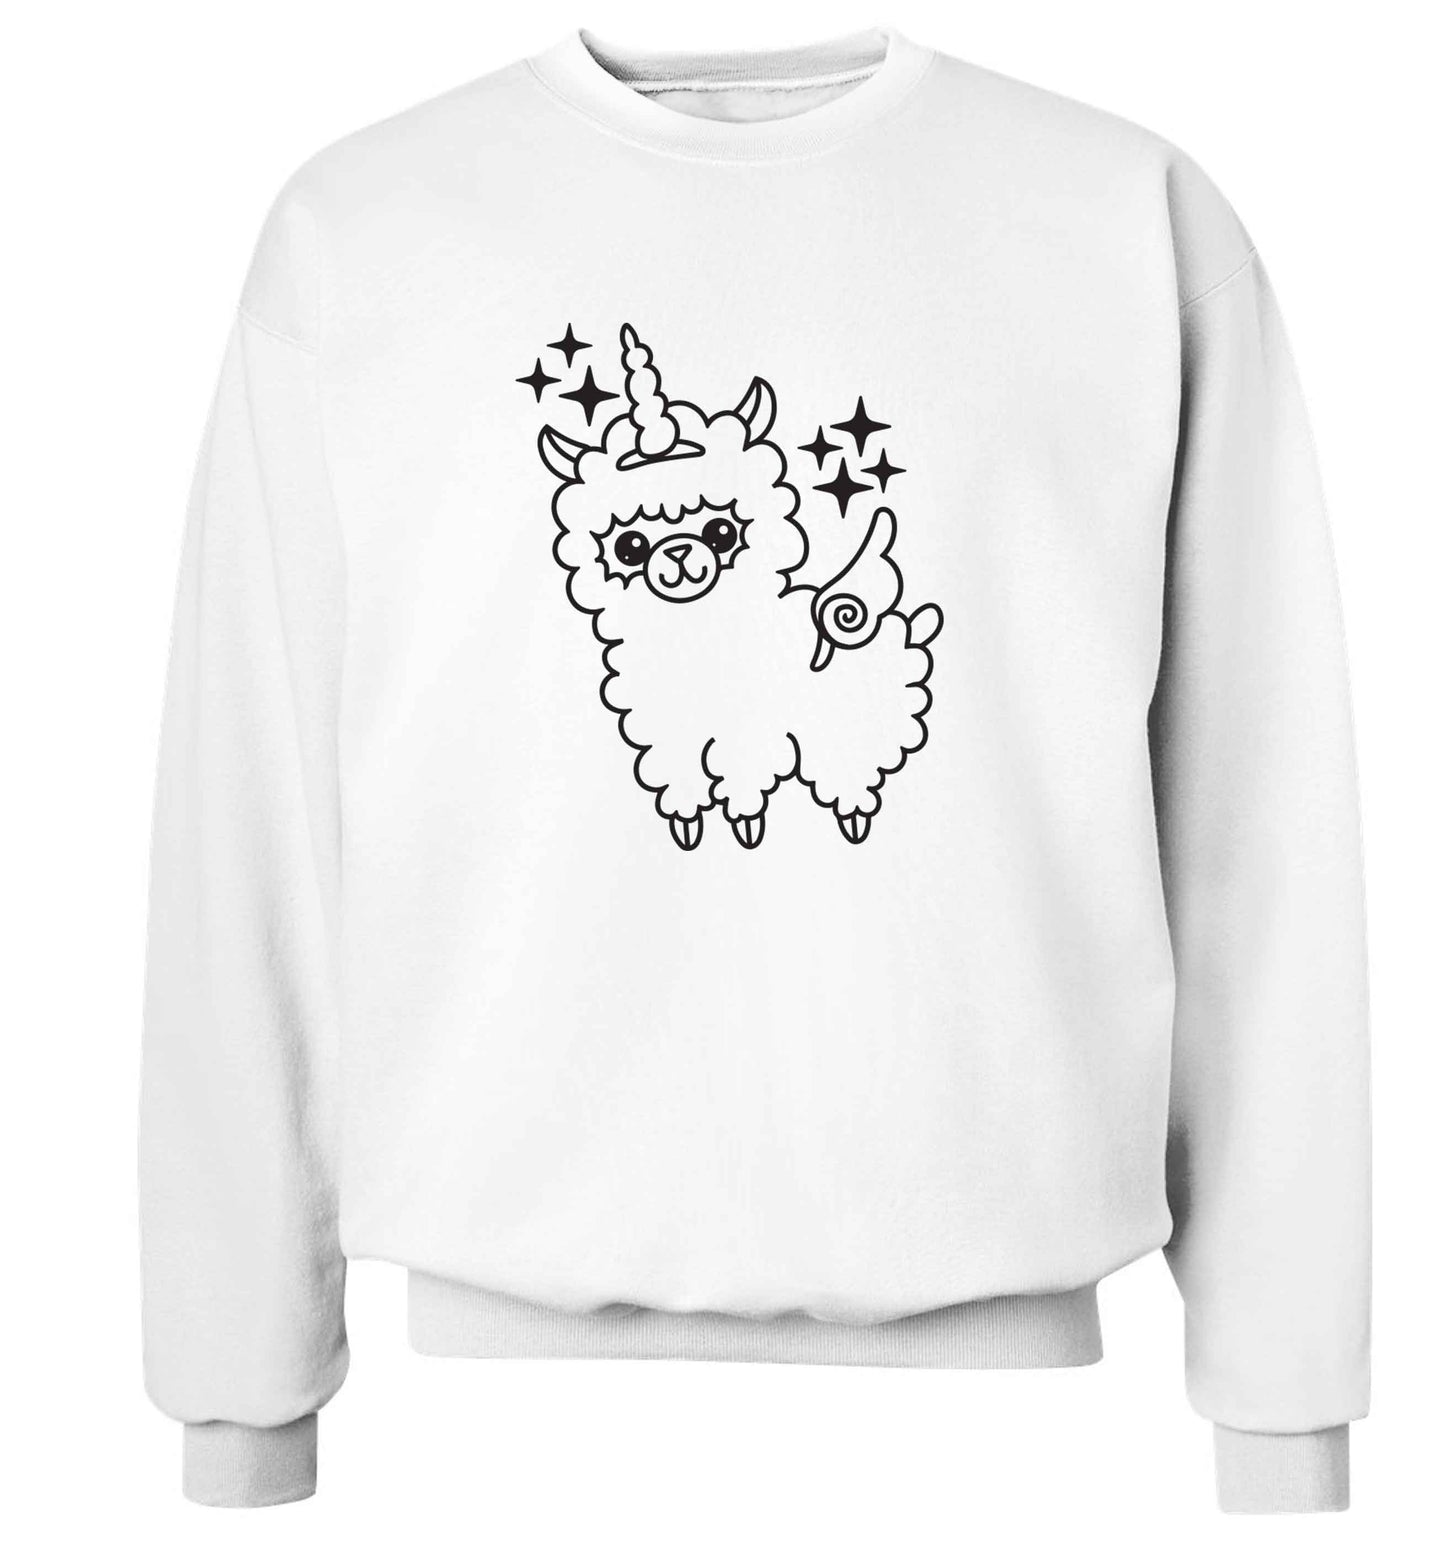 Llamacorn llama unicorn adult's unisex white sweater 2XL